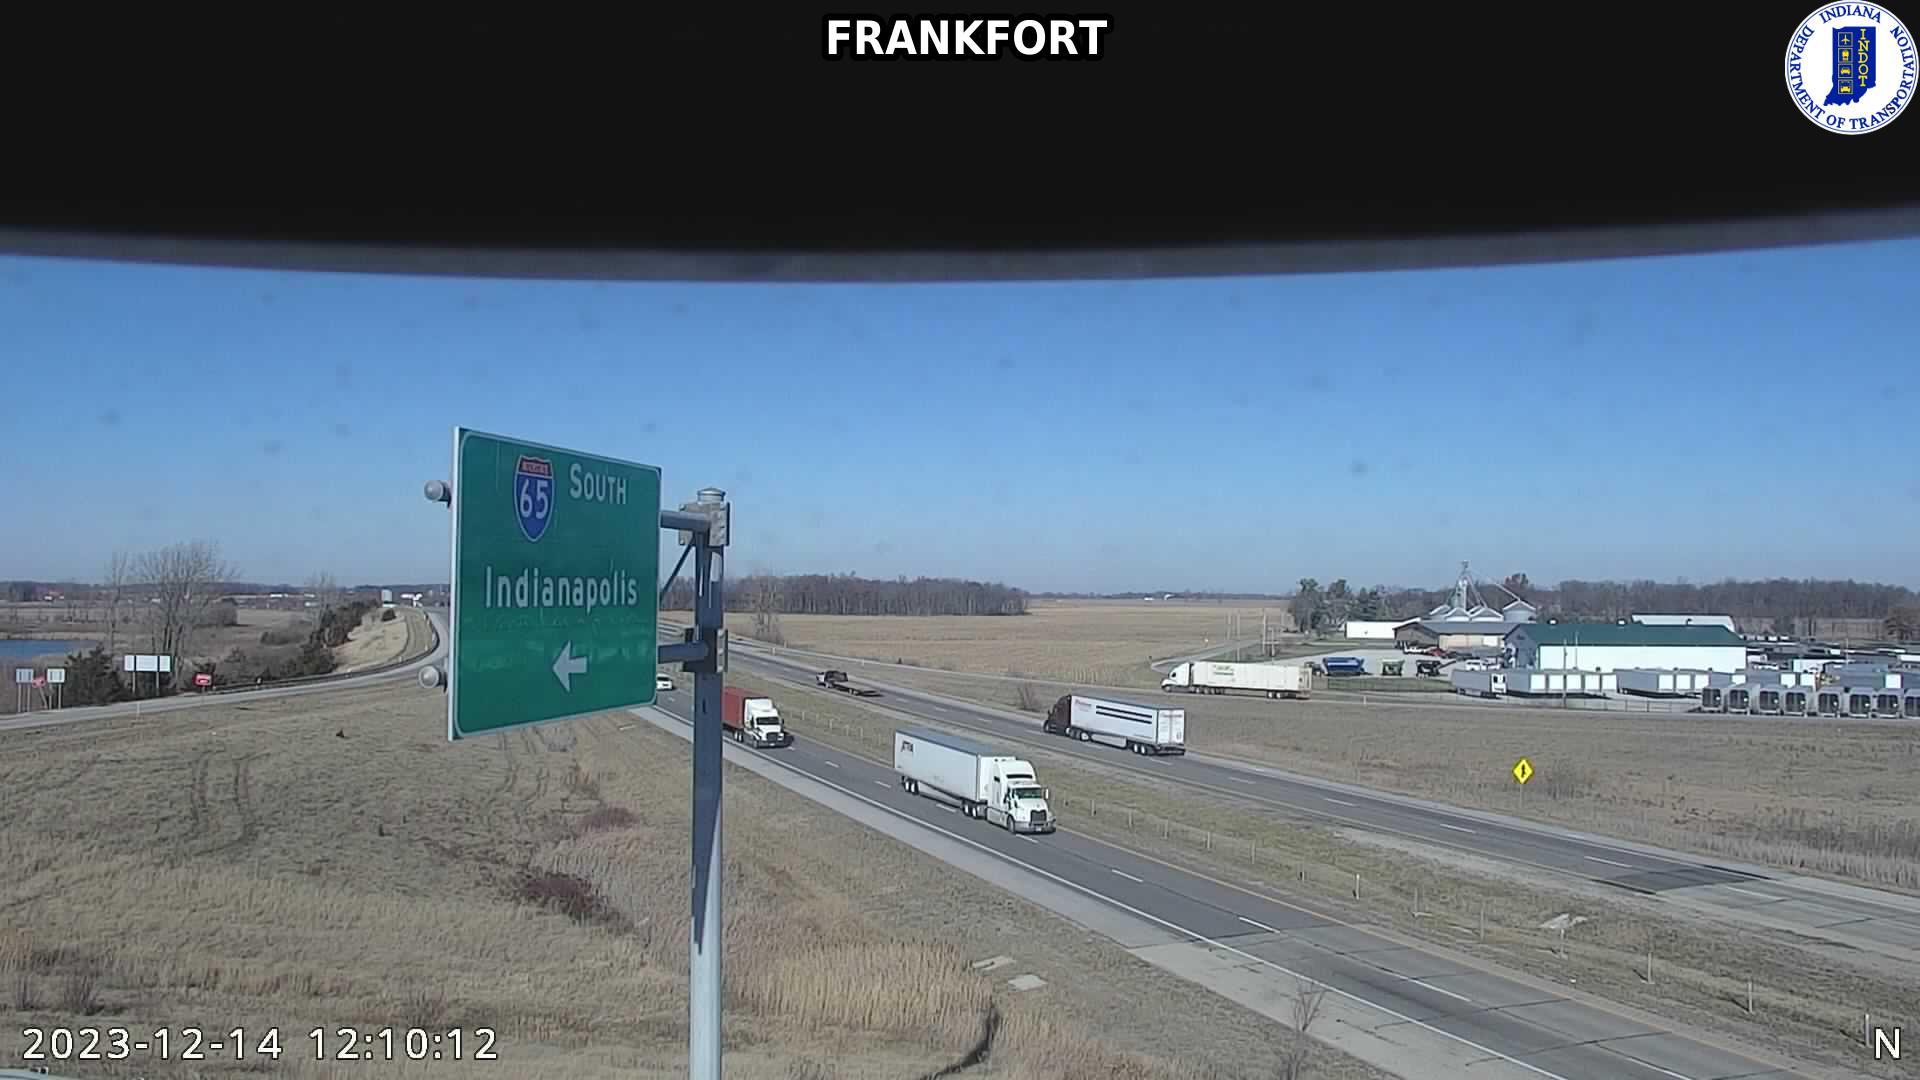 Fickle: I-65: FRANKFORT Traffic Camera